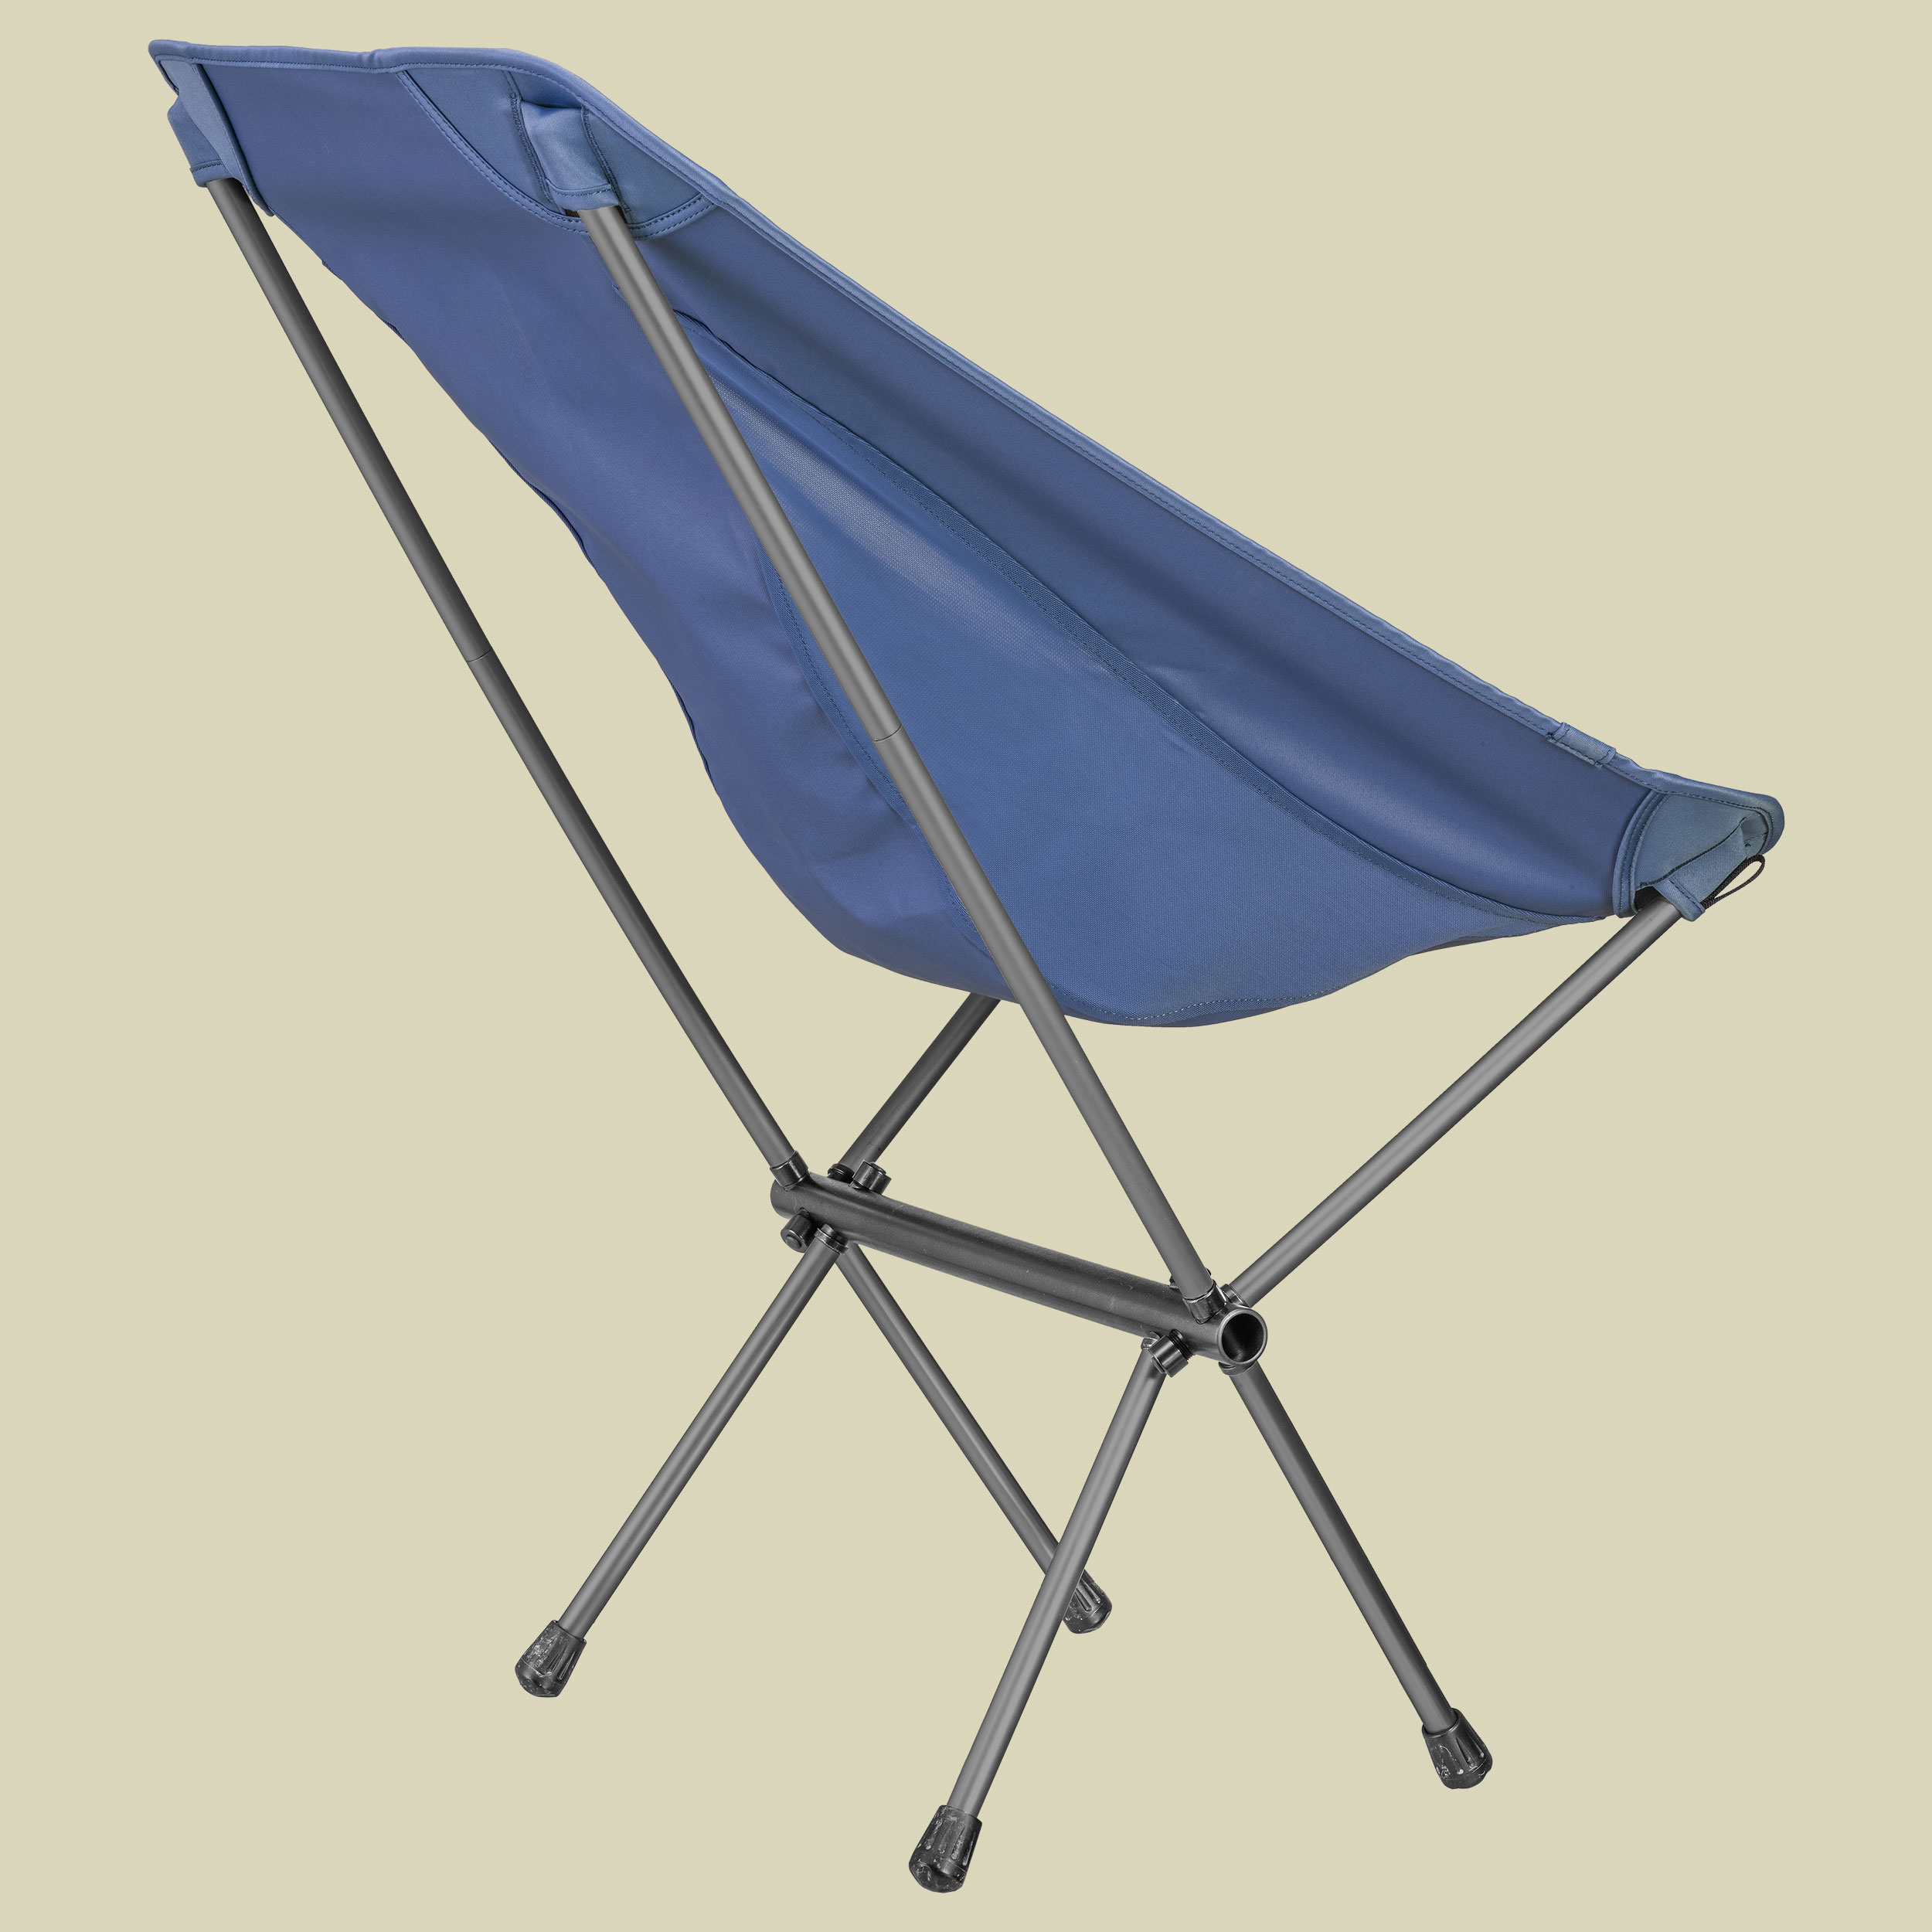 Chair Kiwi Größe one size Farbe riviera blue